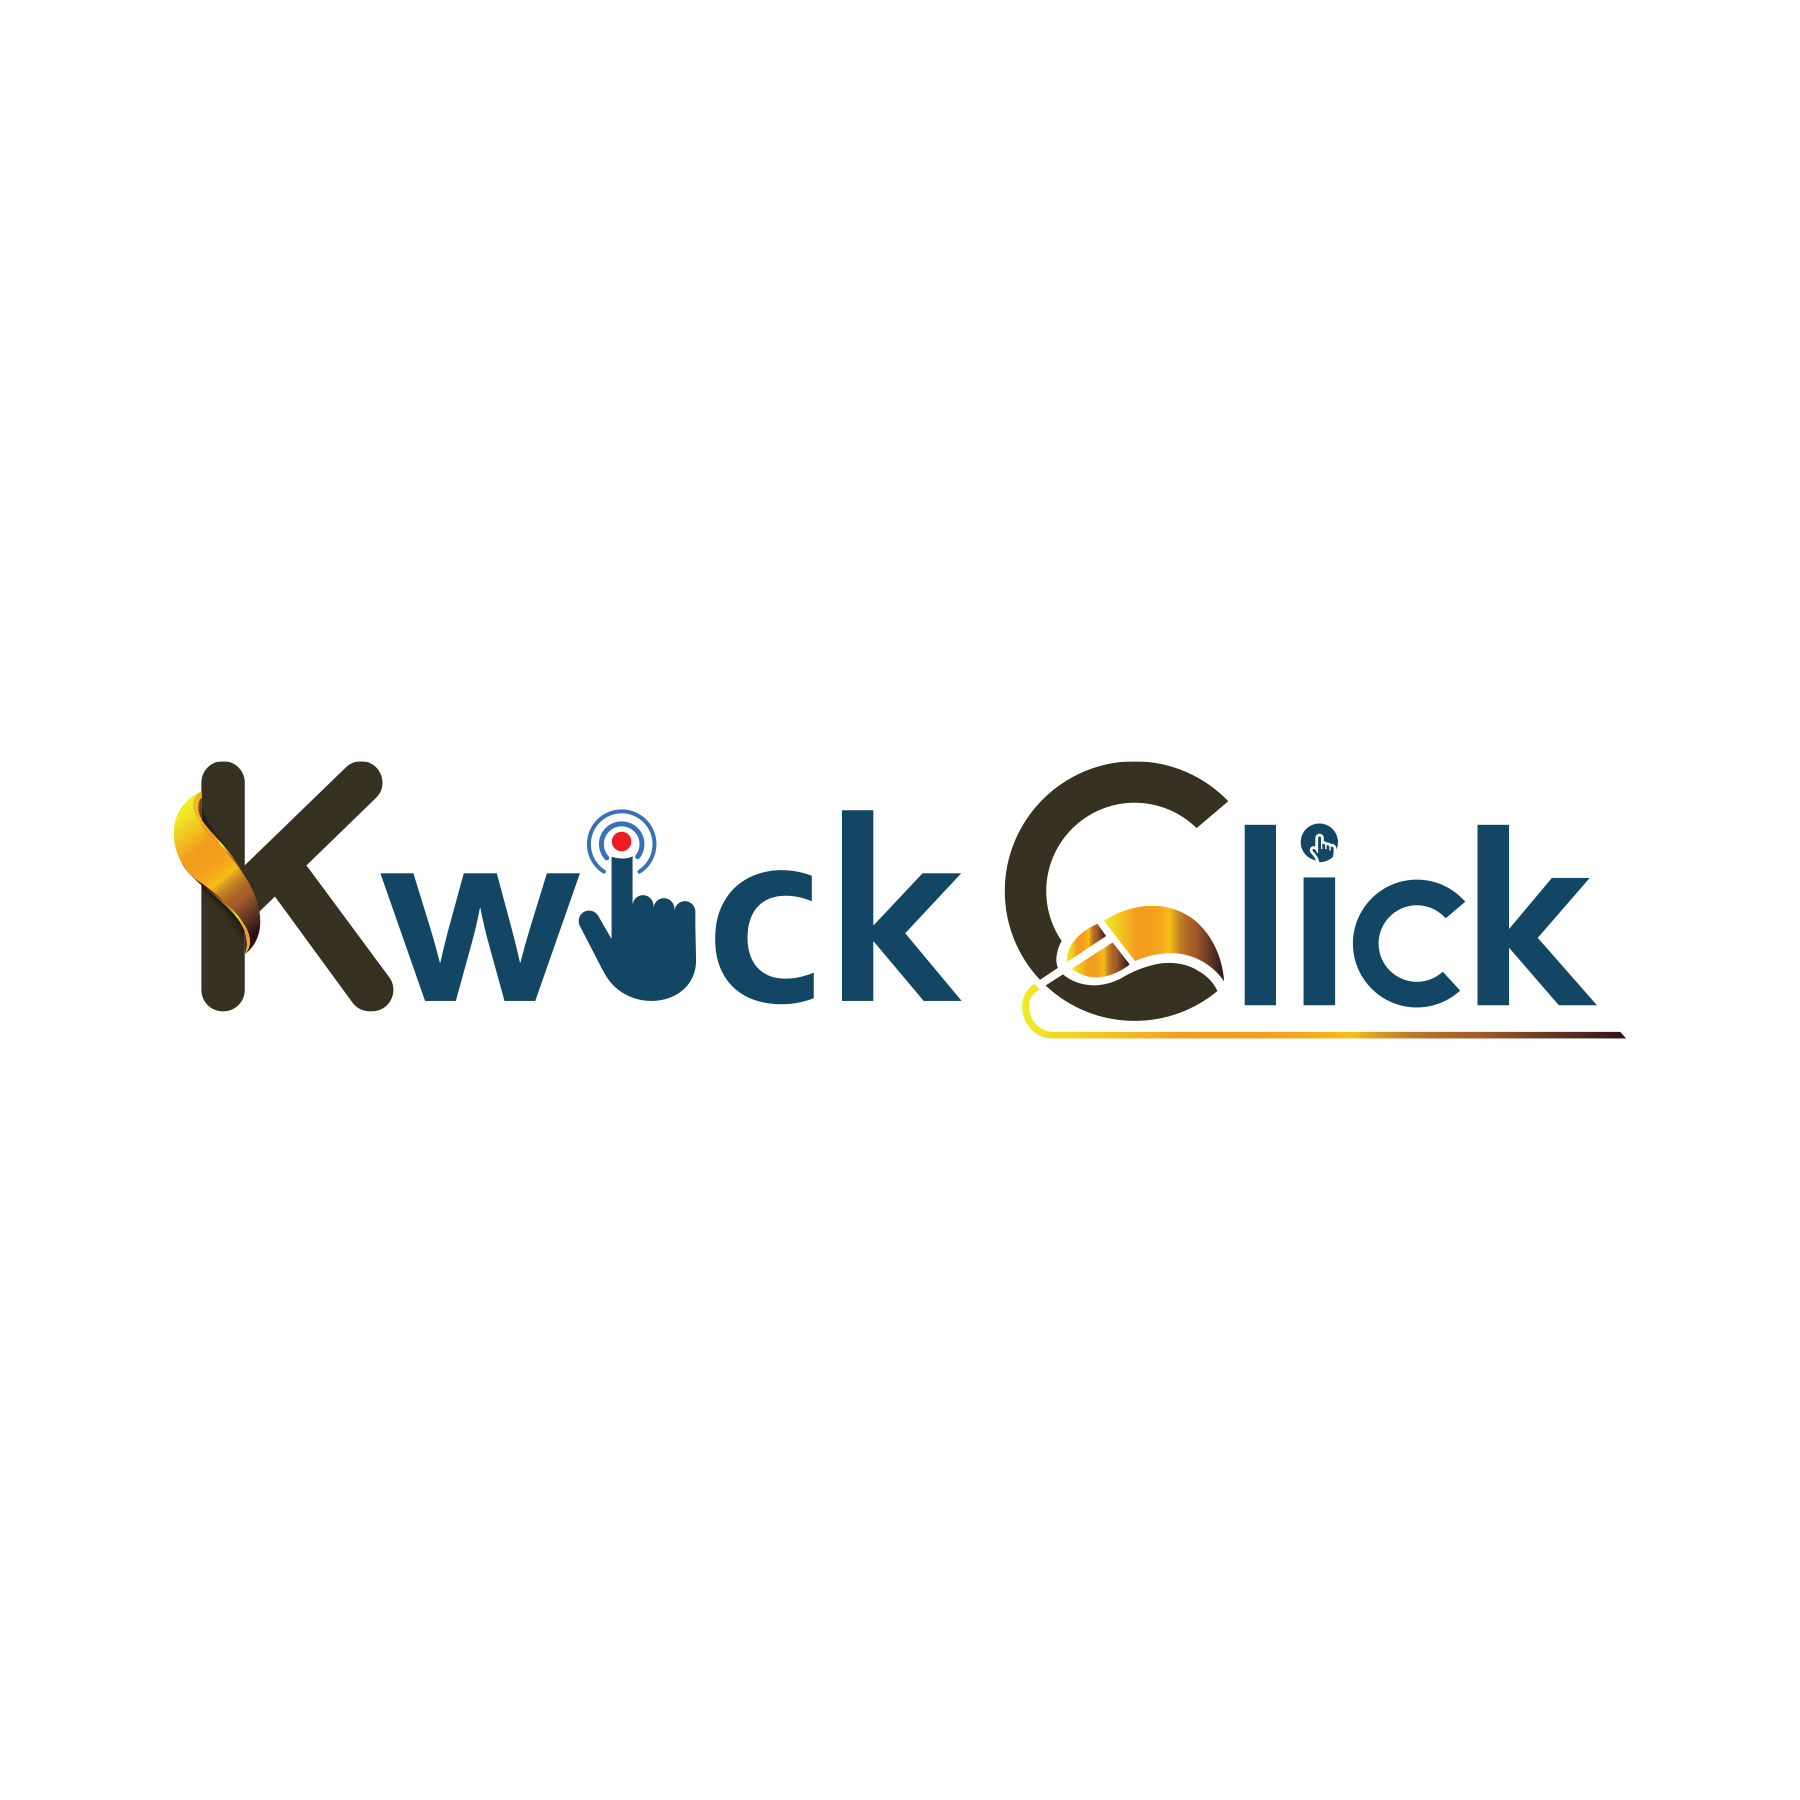 Kwick Click